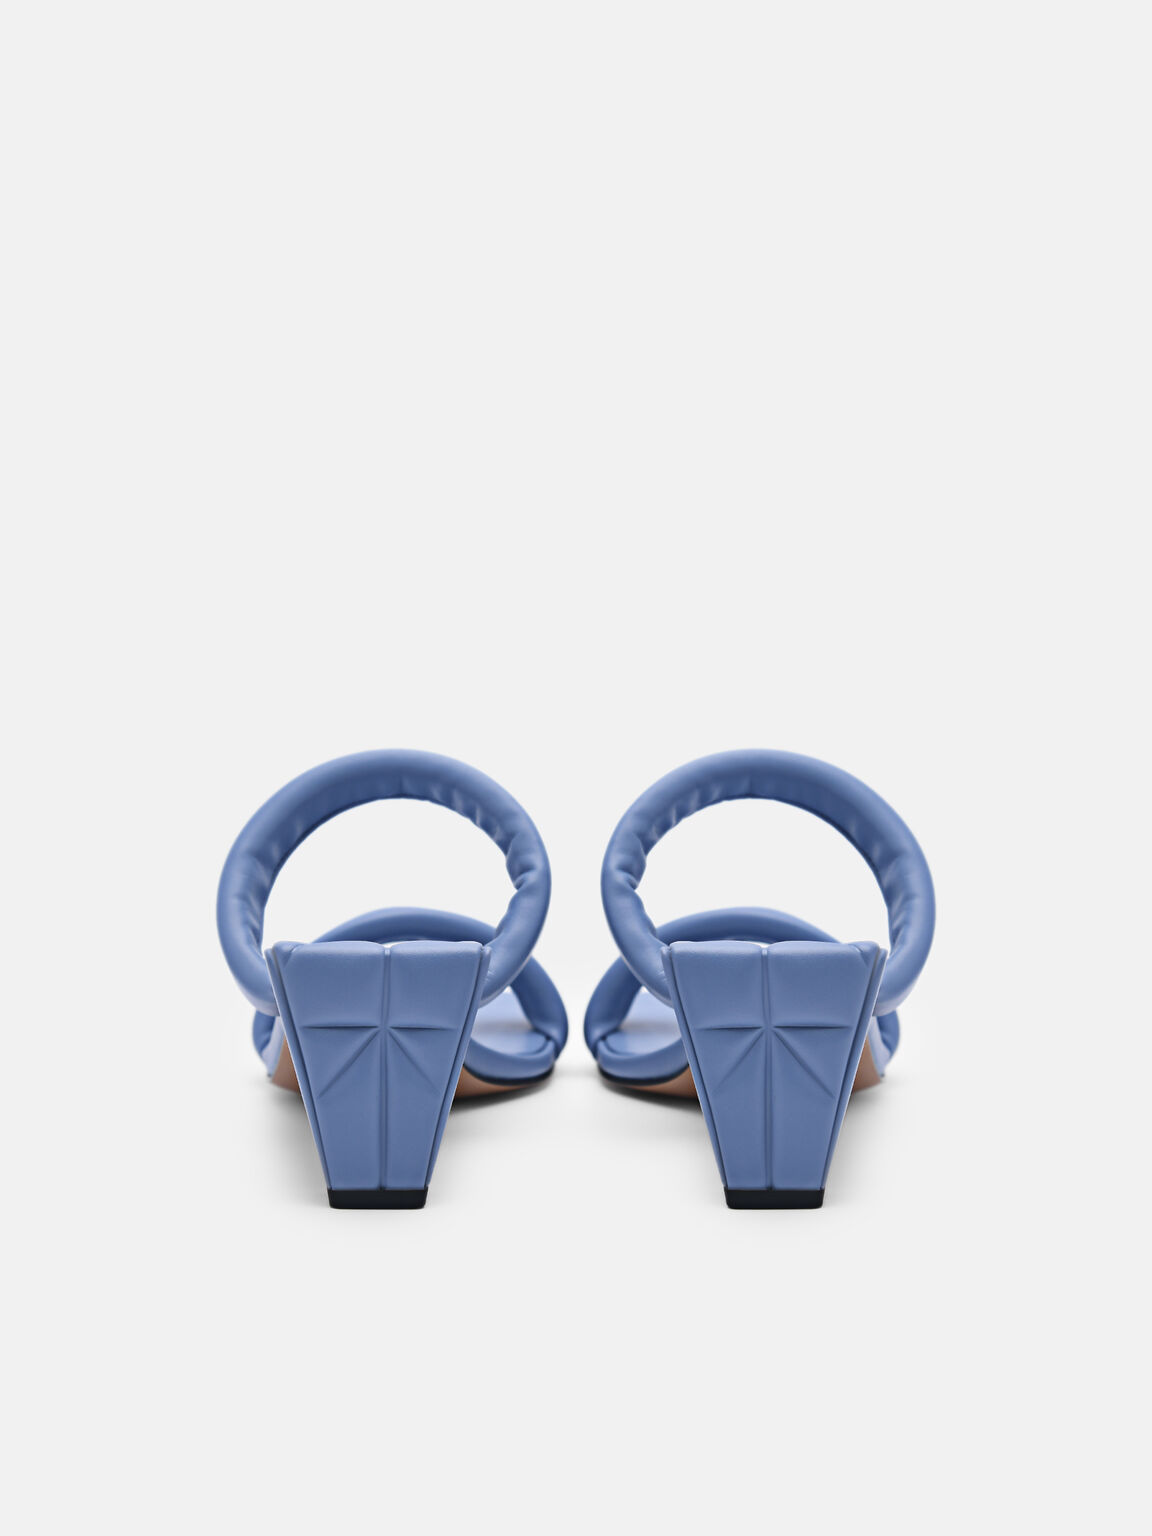 Aster Heel Sandals, Blue